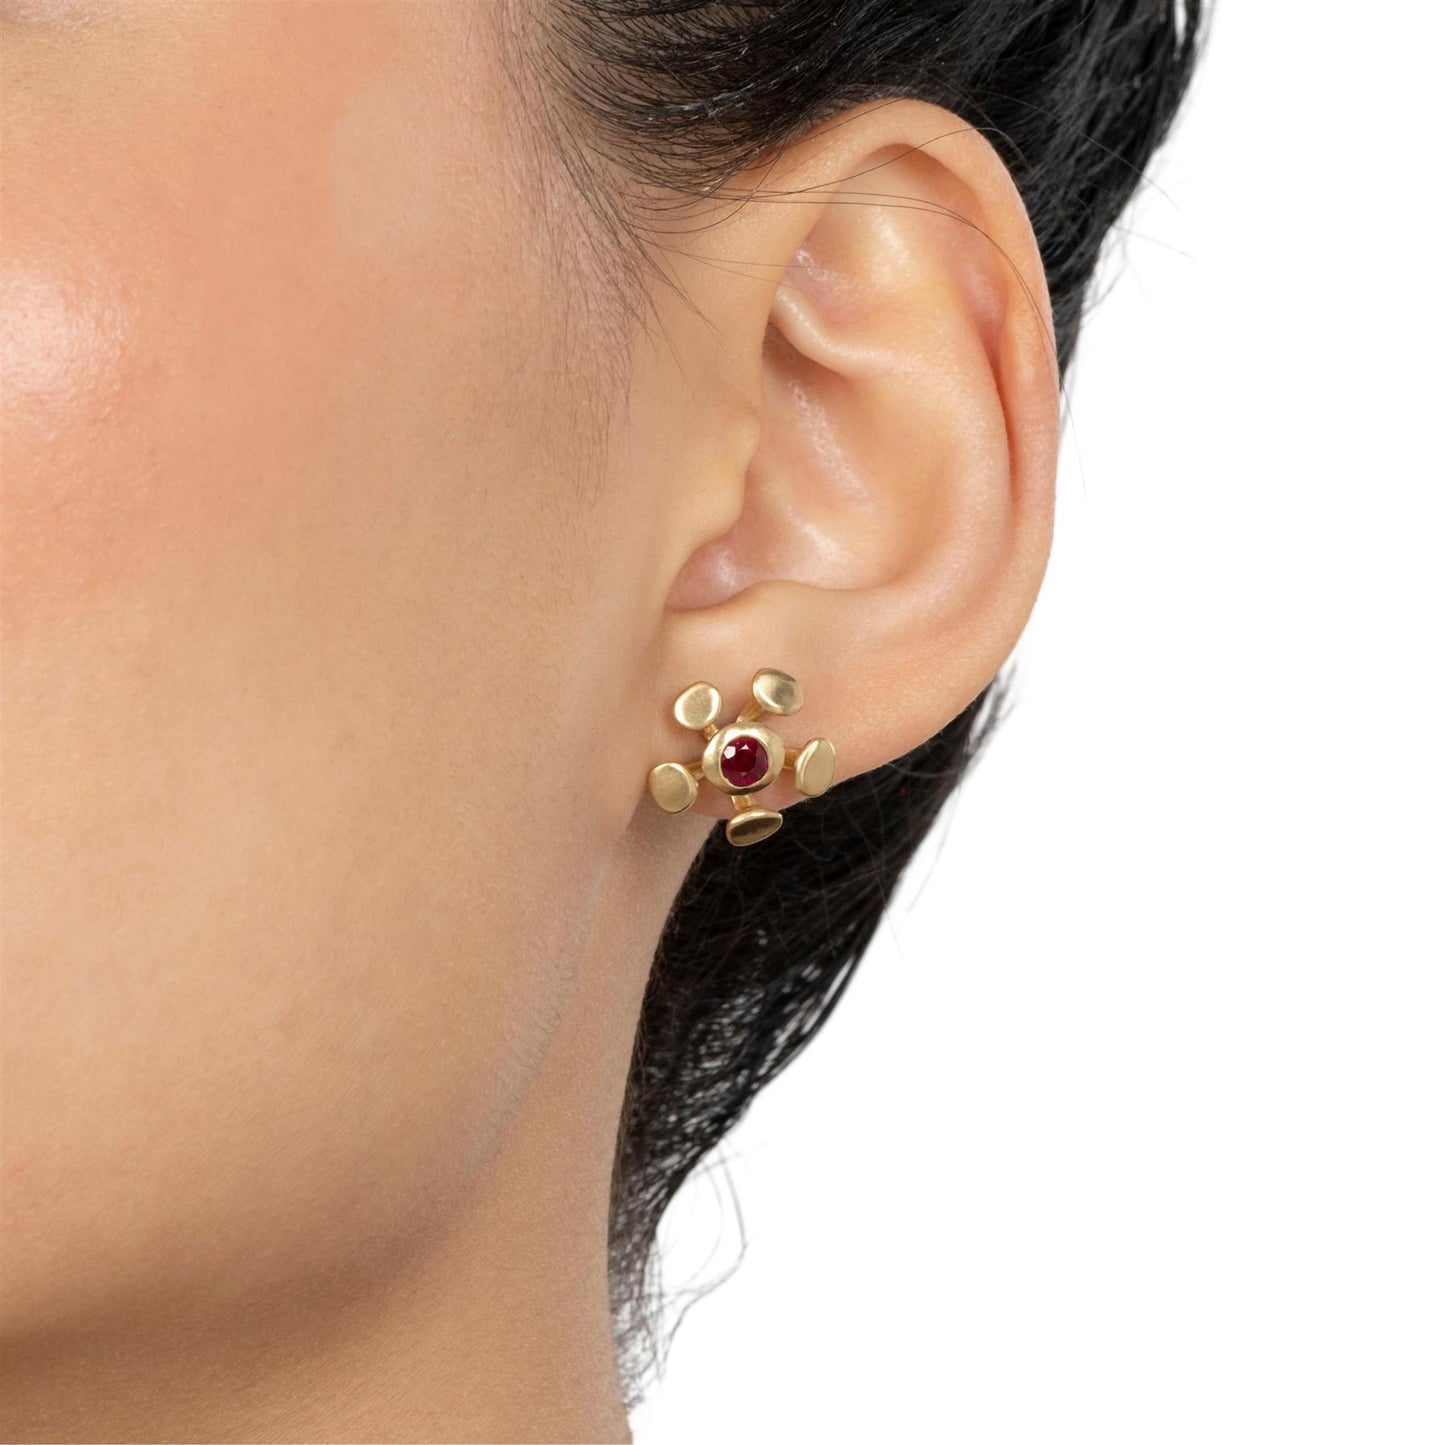 Chrona Ruby Stud Earrings by VRAM